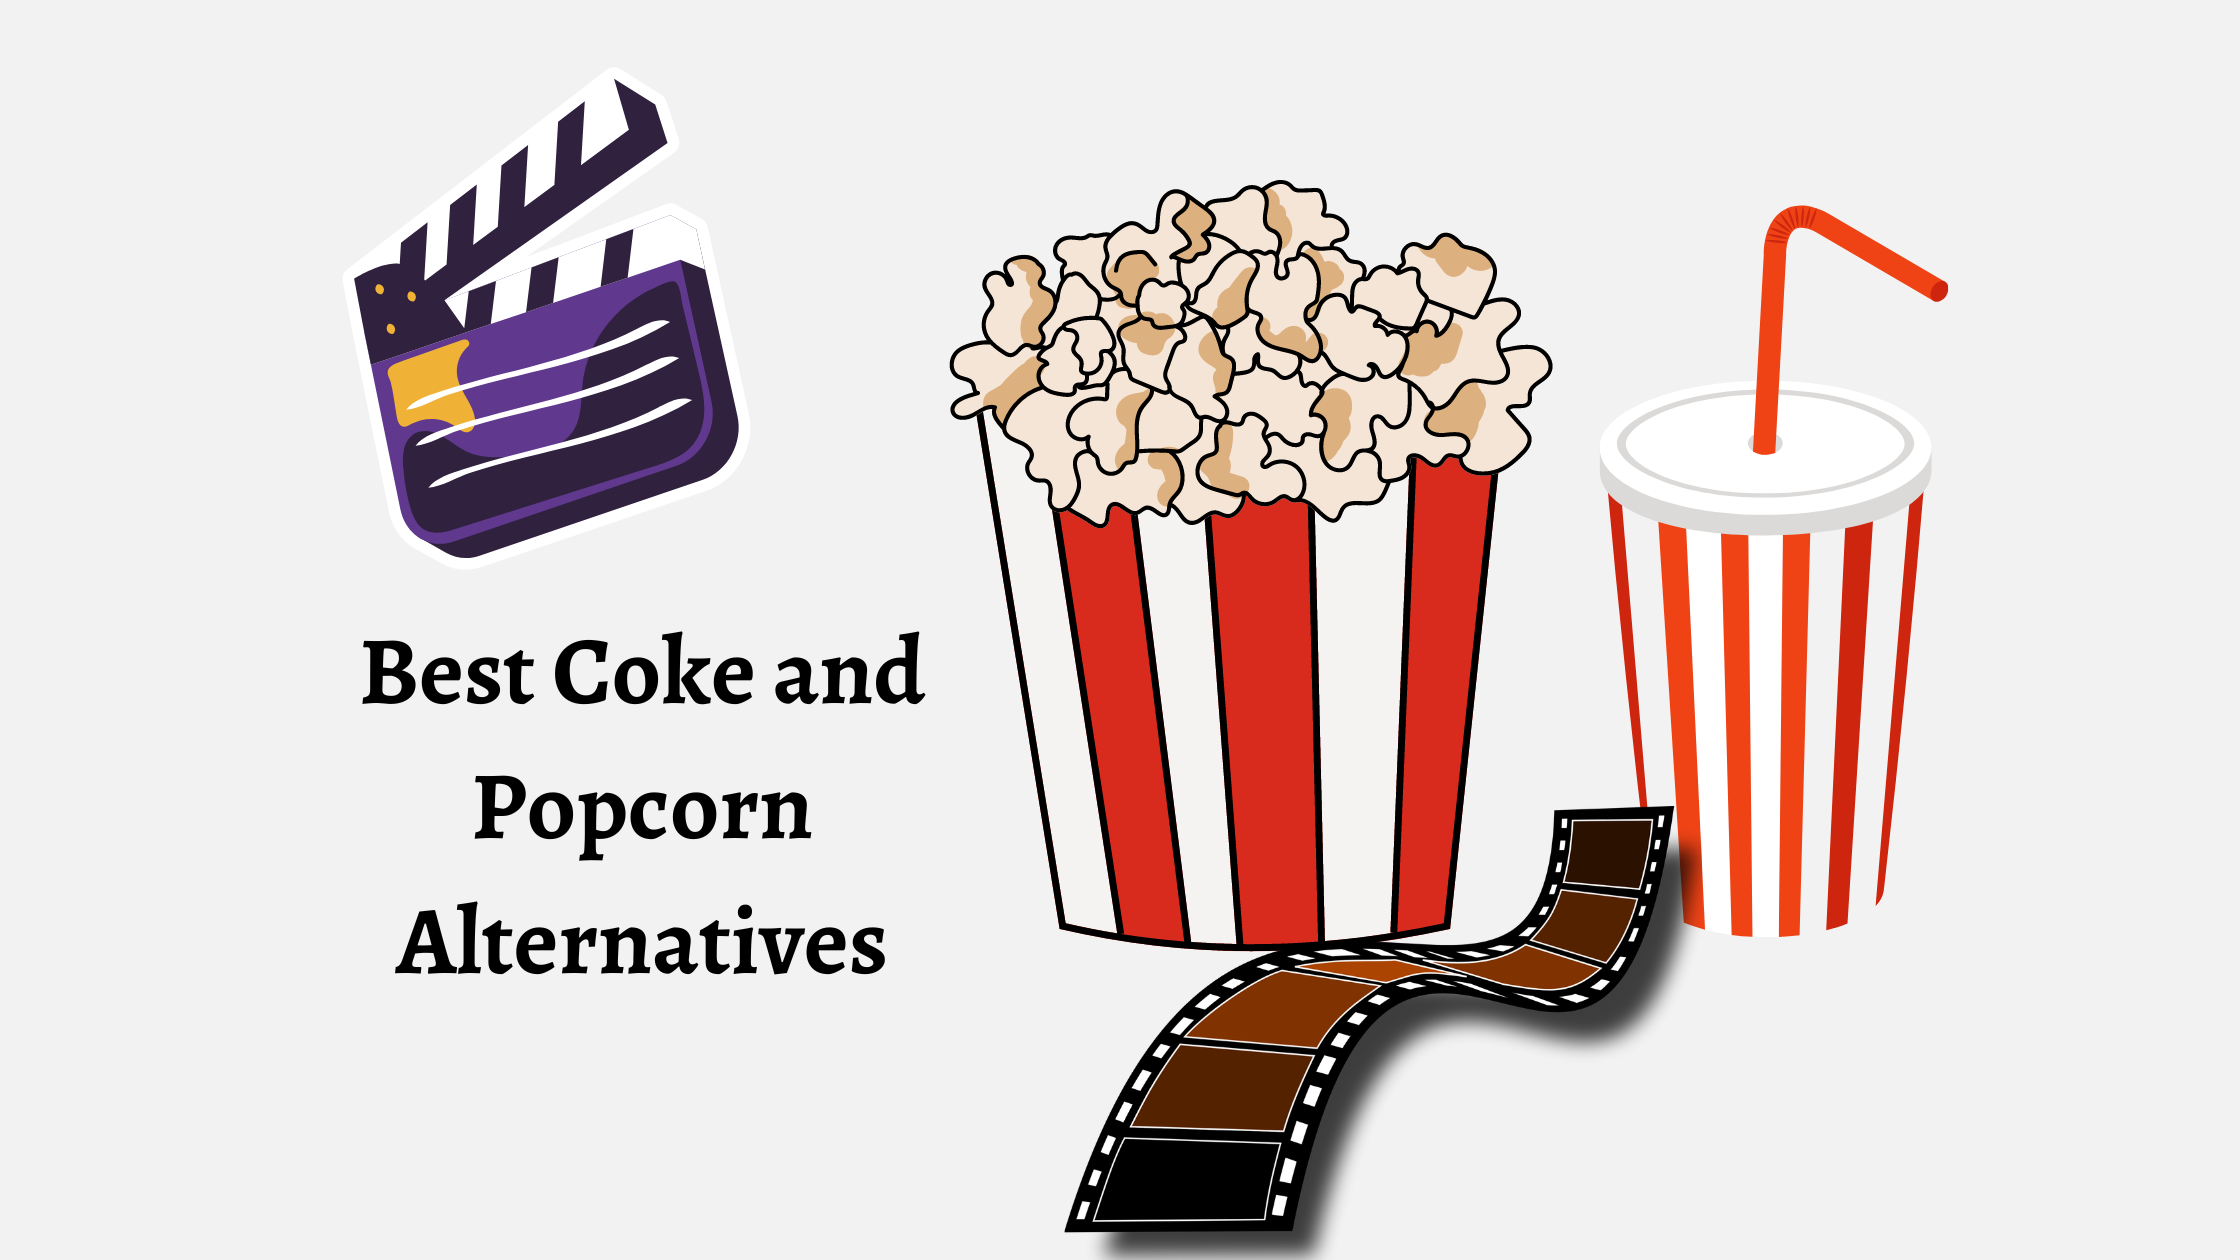 Best Coke and Popcorn Alternatives